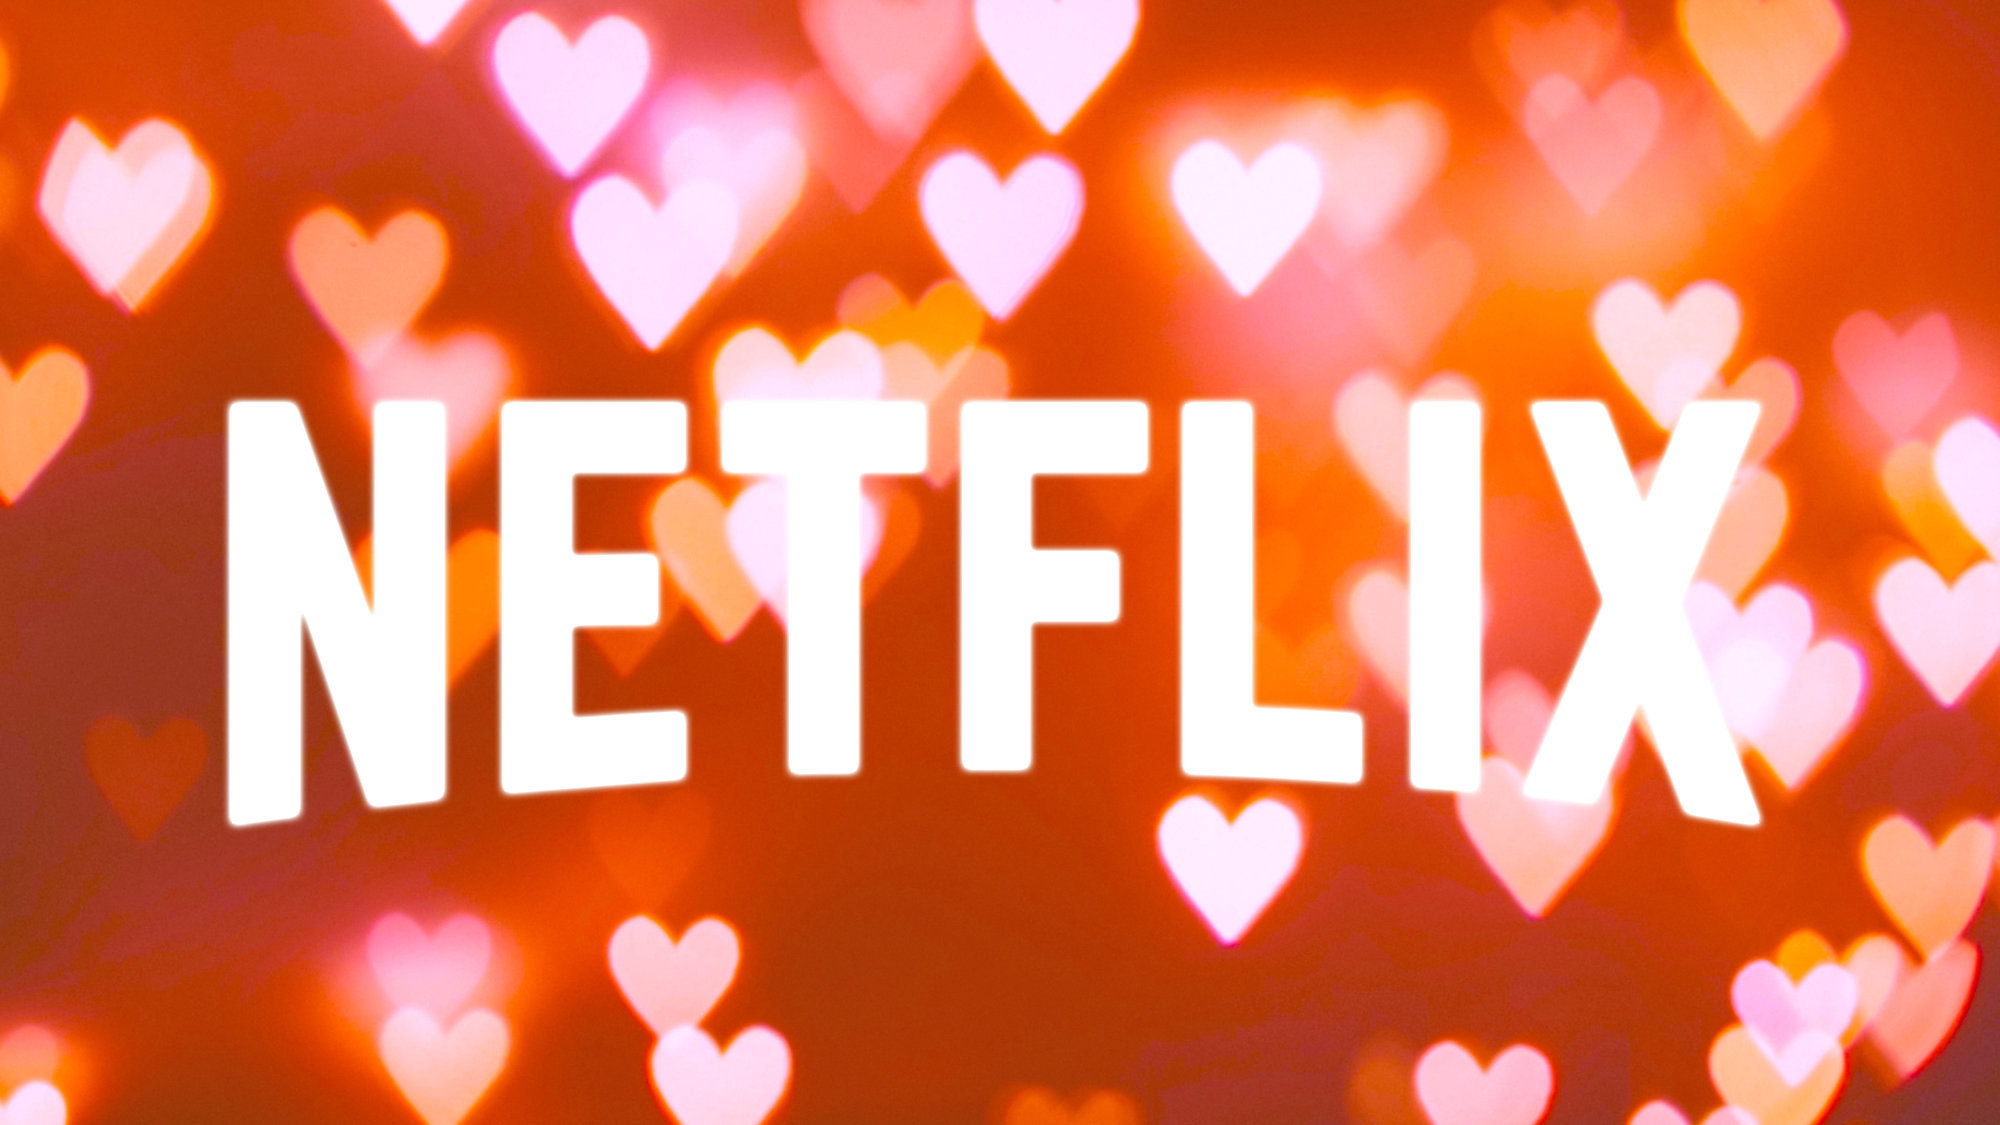 7 comedias románticas que ver en Netflix este San Valentín